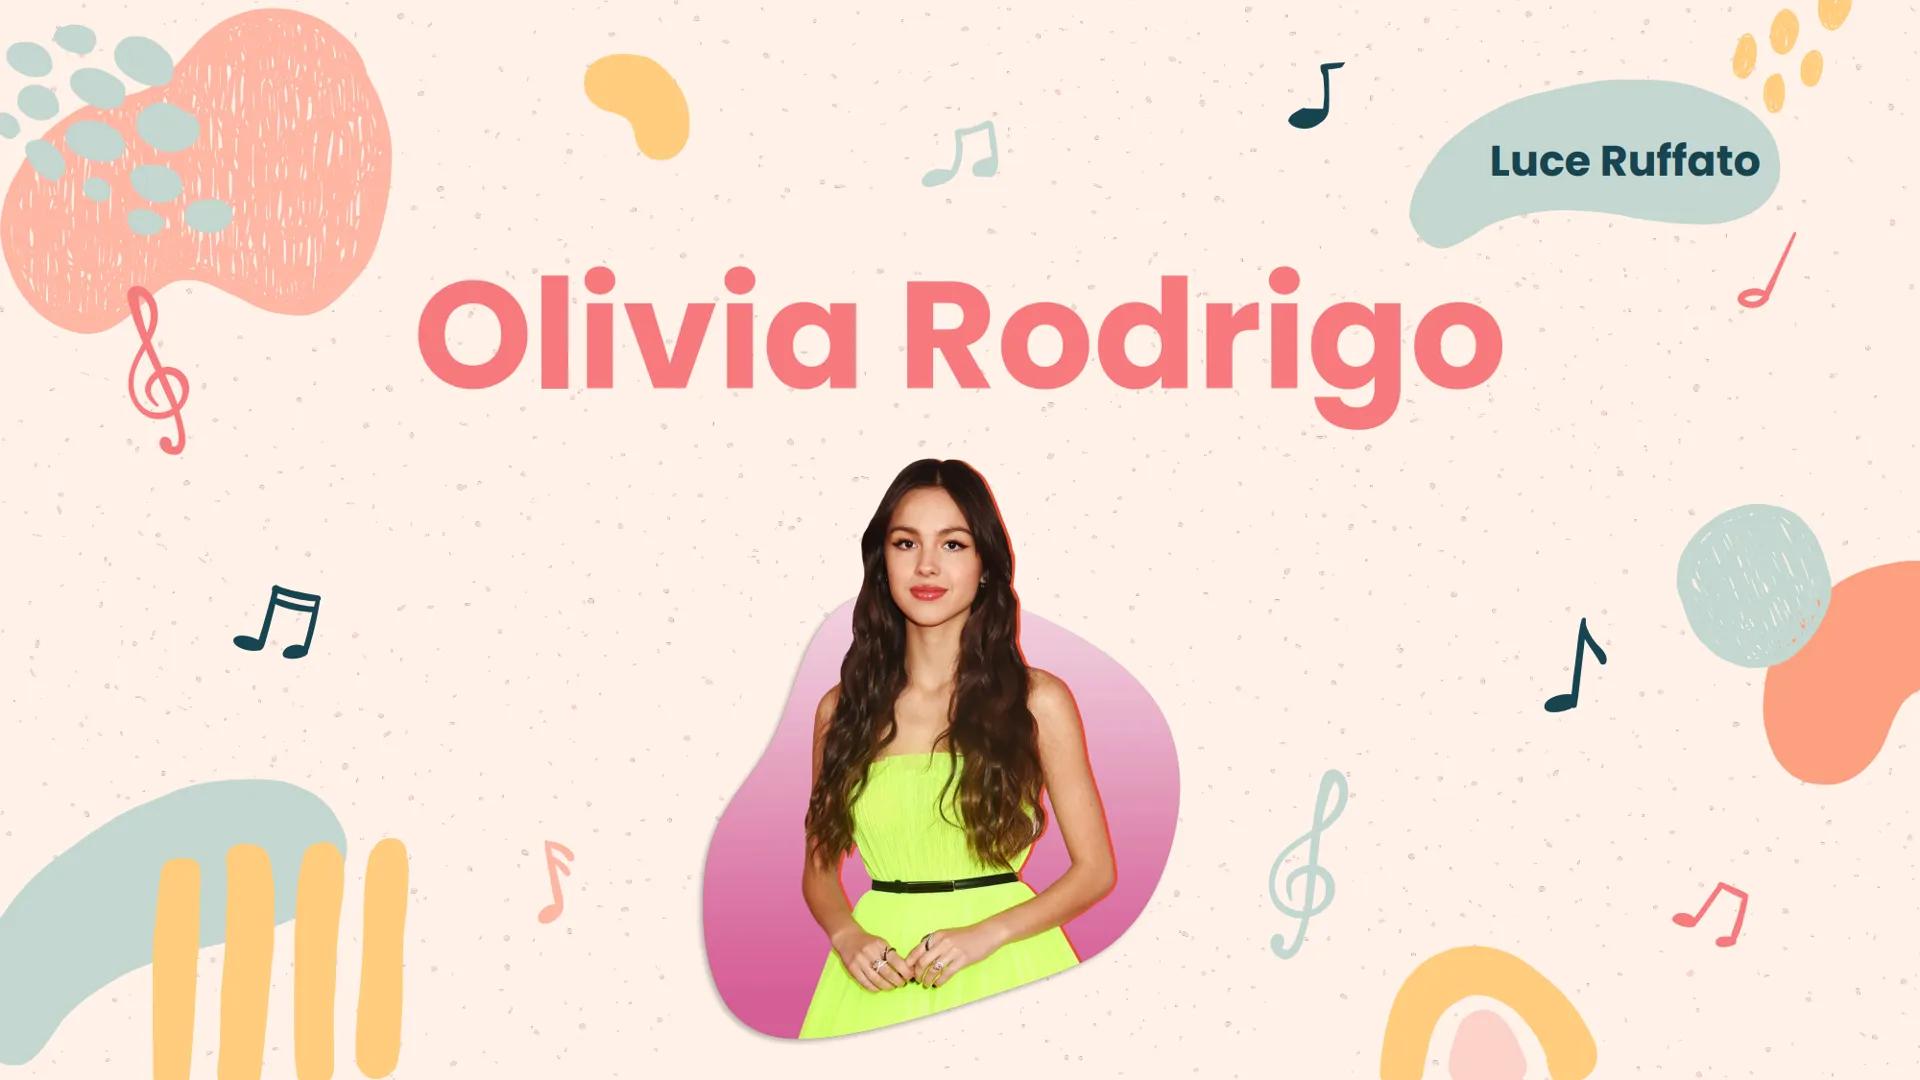 5
5
J
Luce Ruffato
Olivia Rodrigo
C
s 10
Introduction
All about Olivia
Rodrigo's life
1
Index
2
Songs
Her most successful
songs
Music Awards